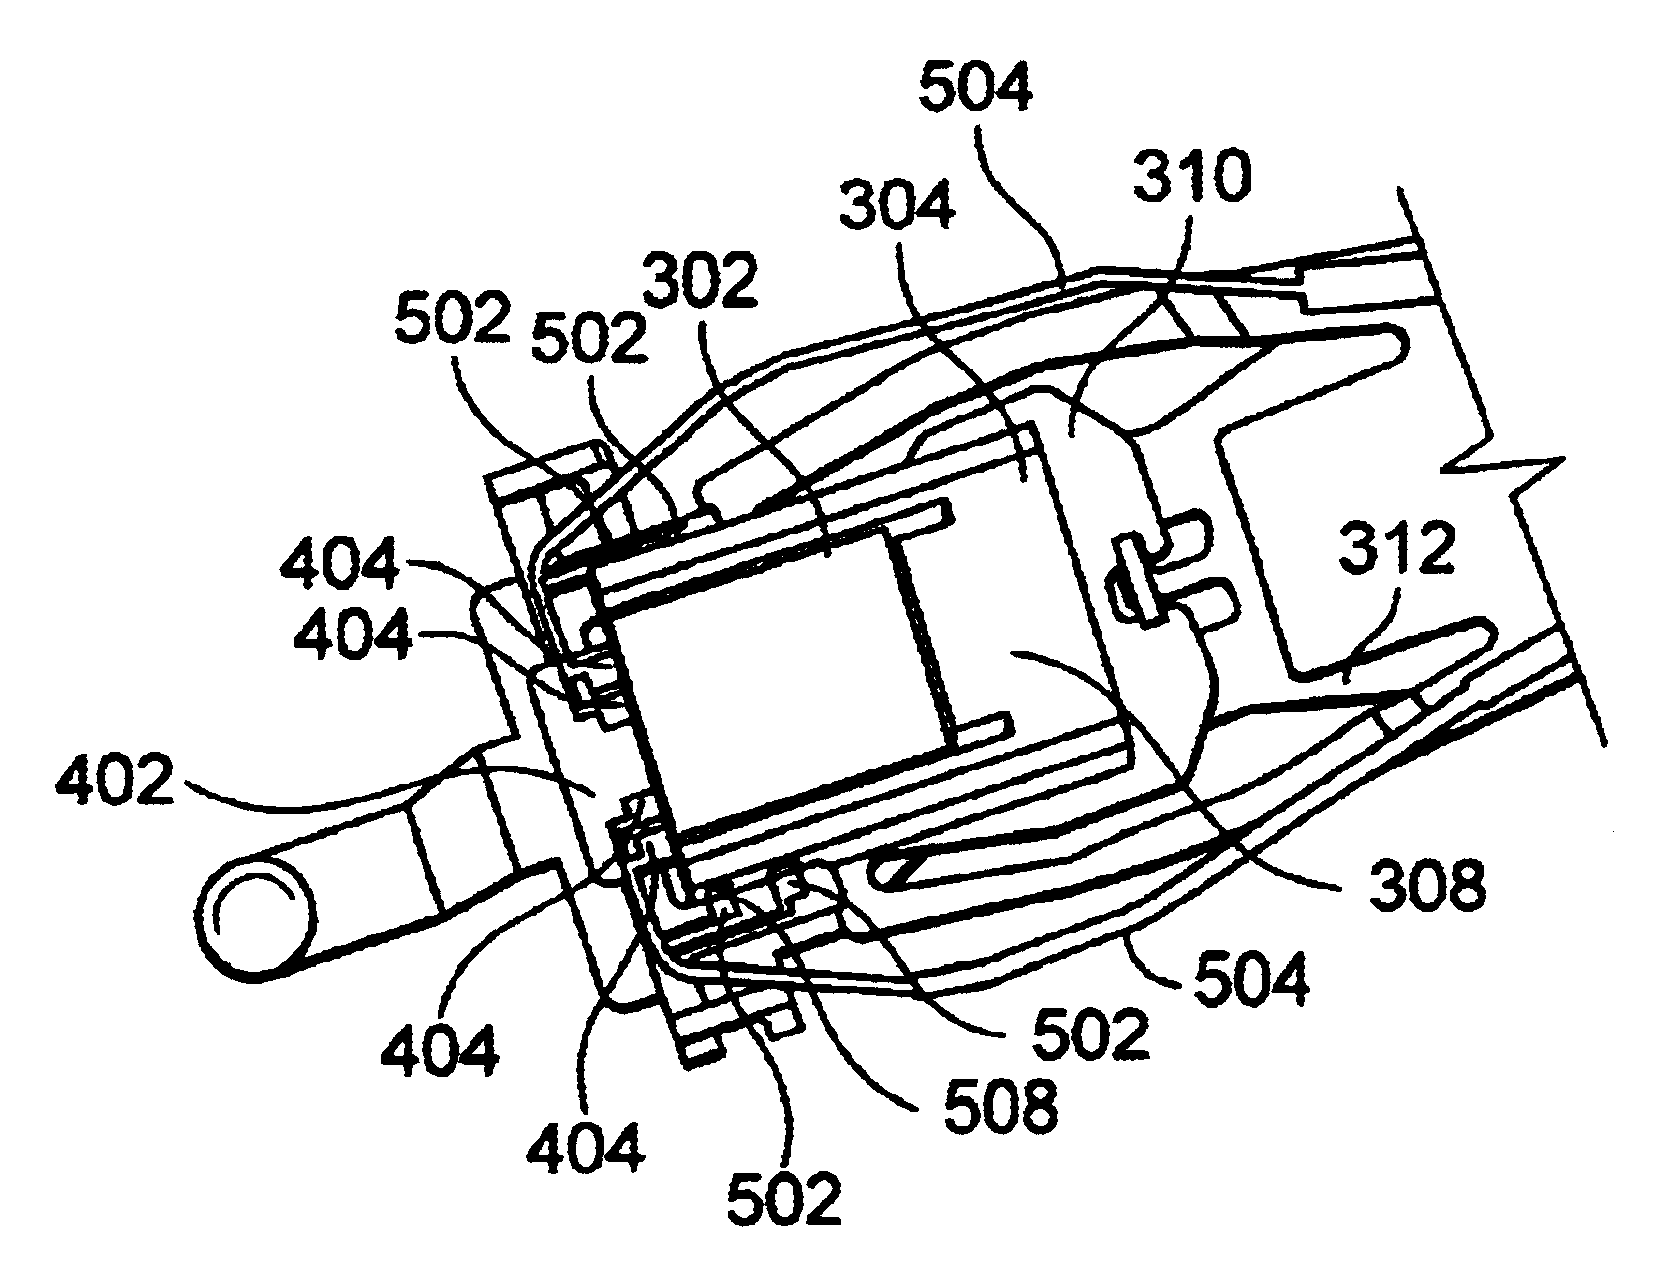 Suspension design for the co-located PZT micro-actuator